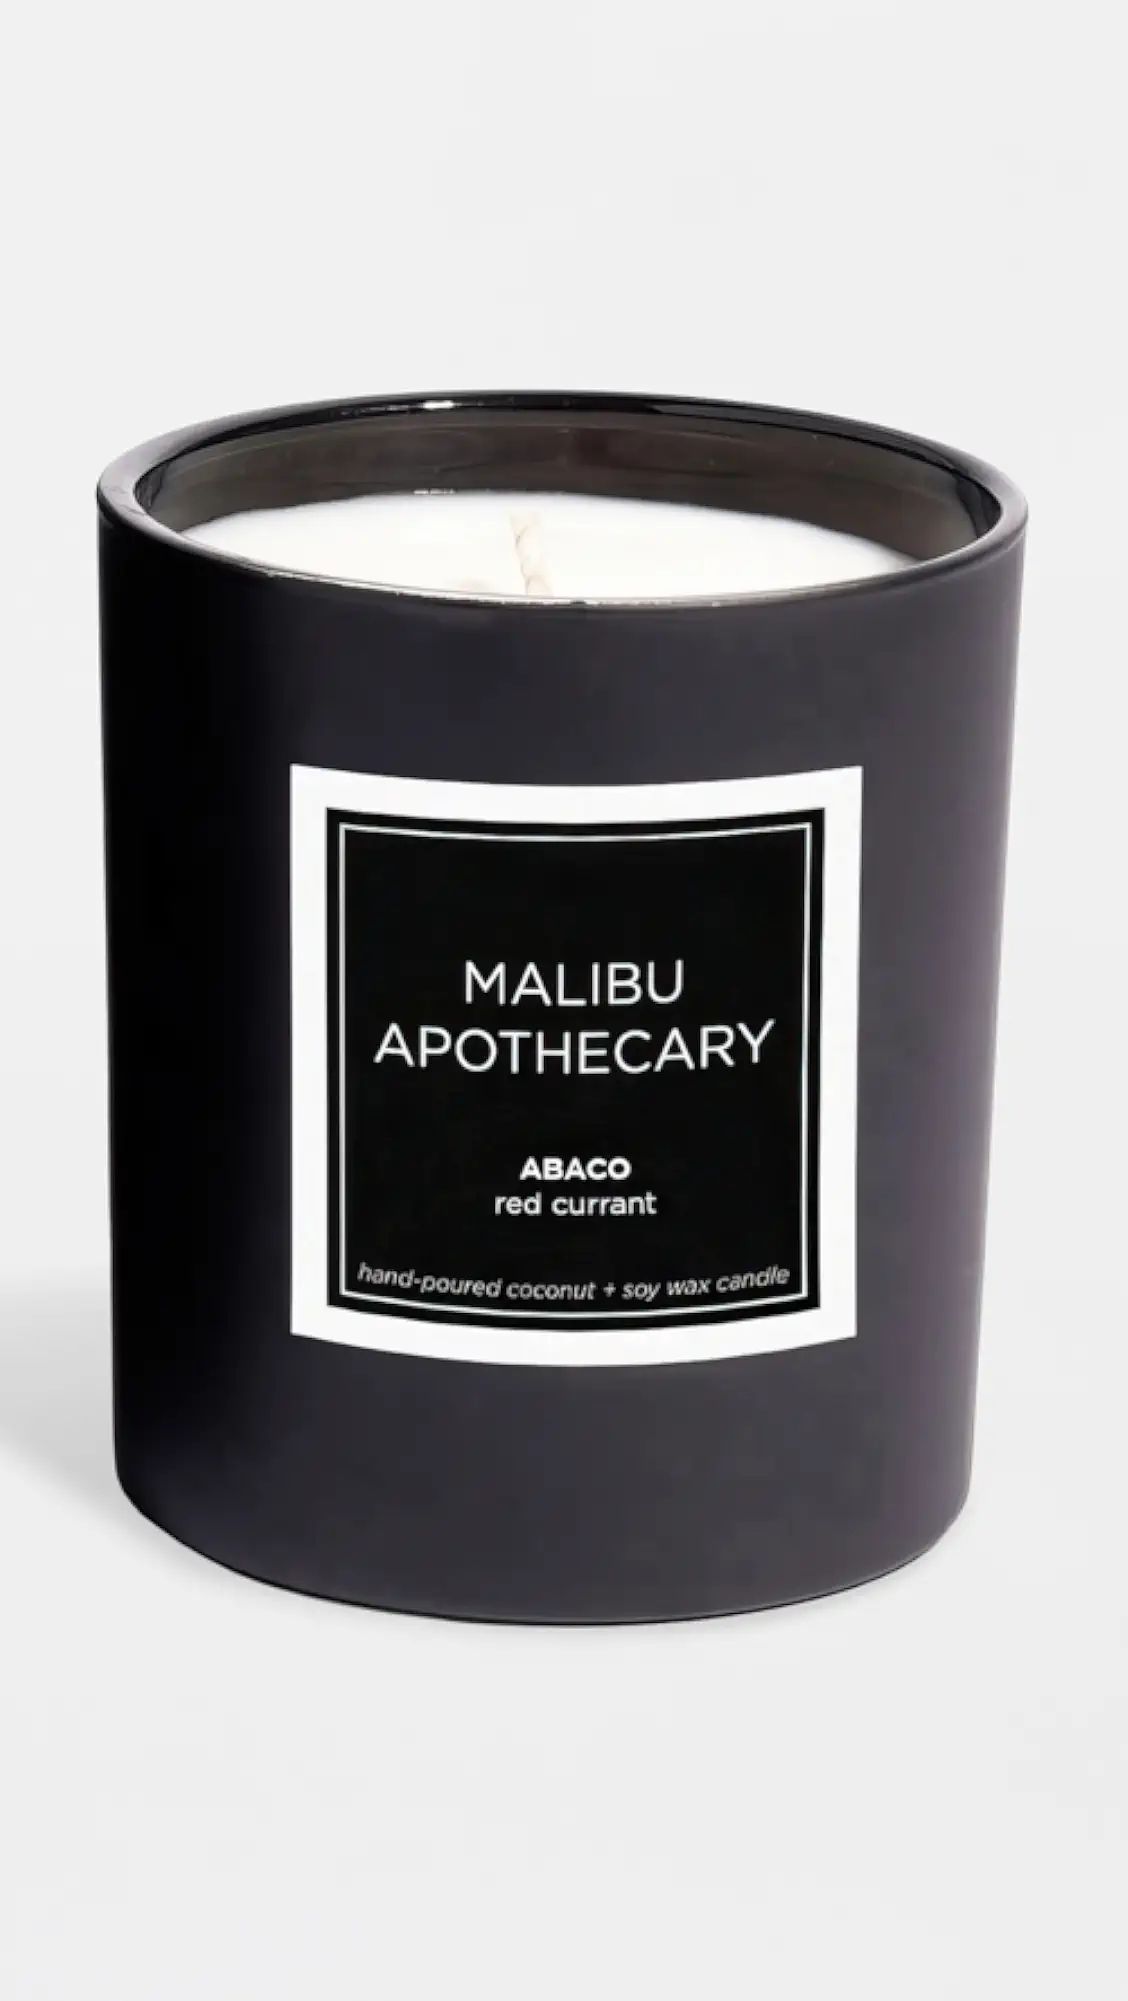 Malibu Apothecary | Shopbop